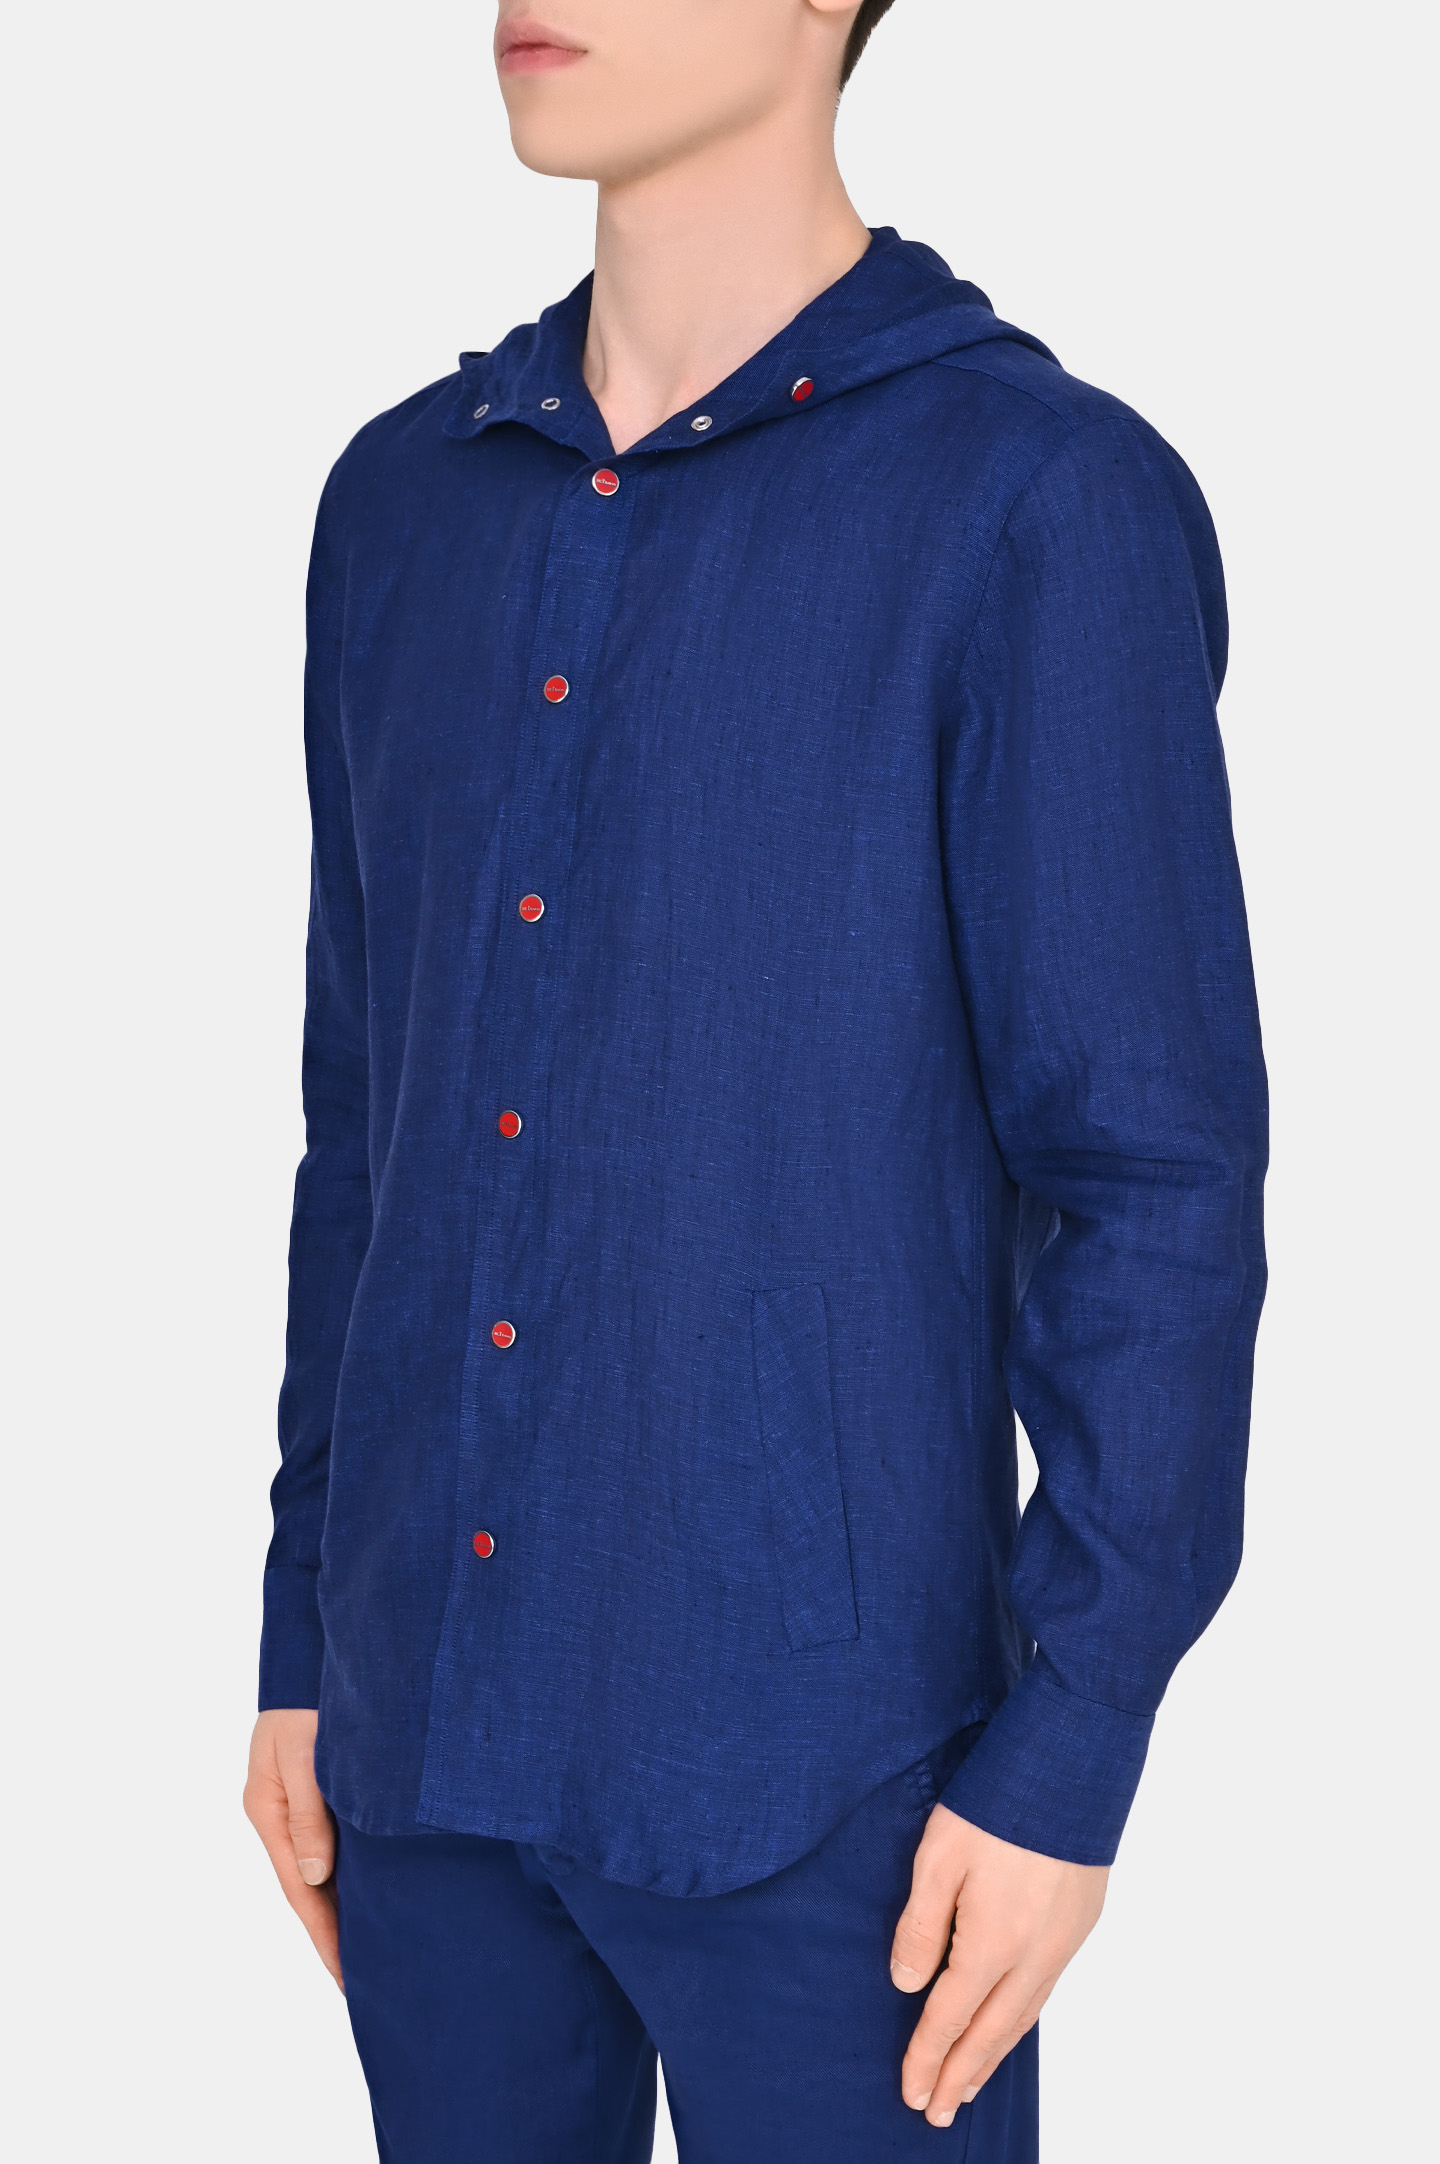 Рубашка KITON UMCMARH084010, цвет: Синий, Мужской